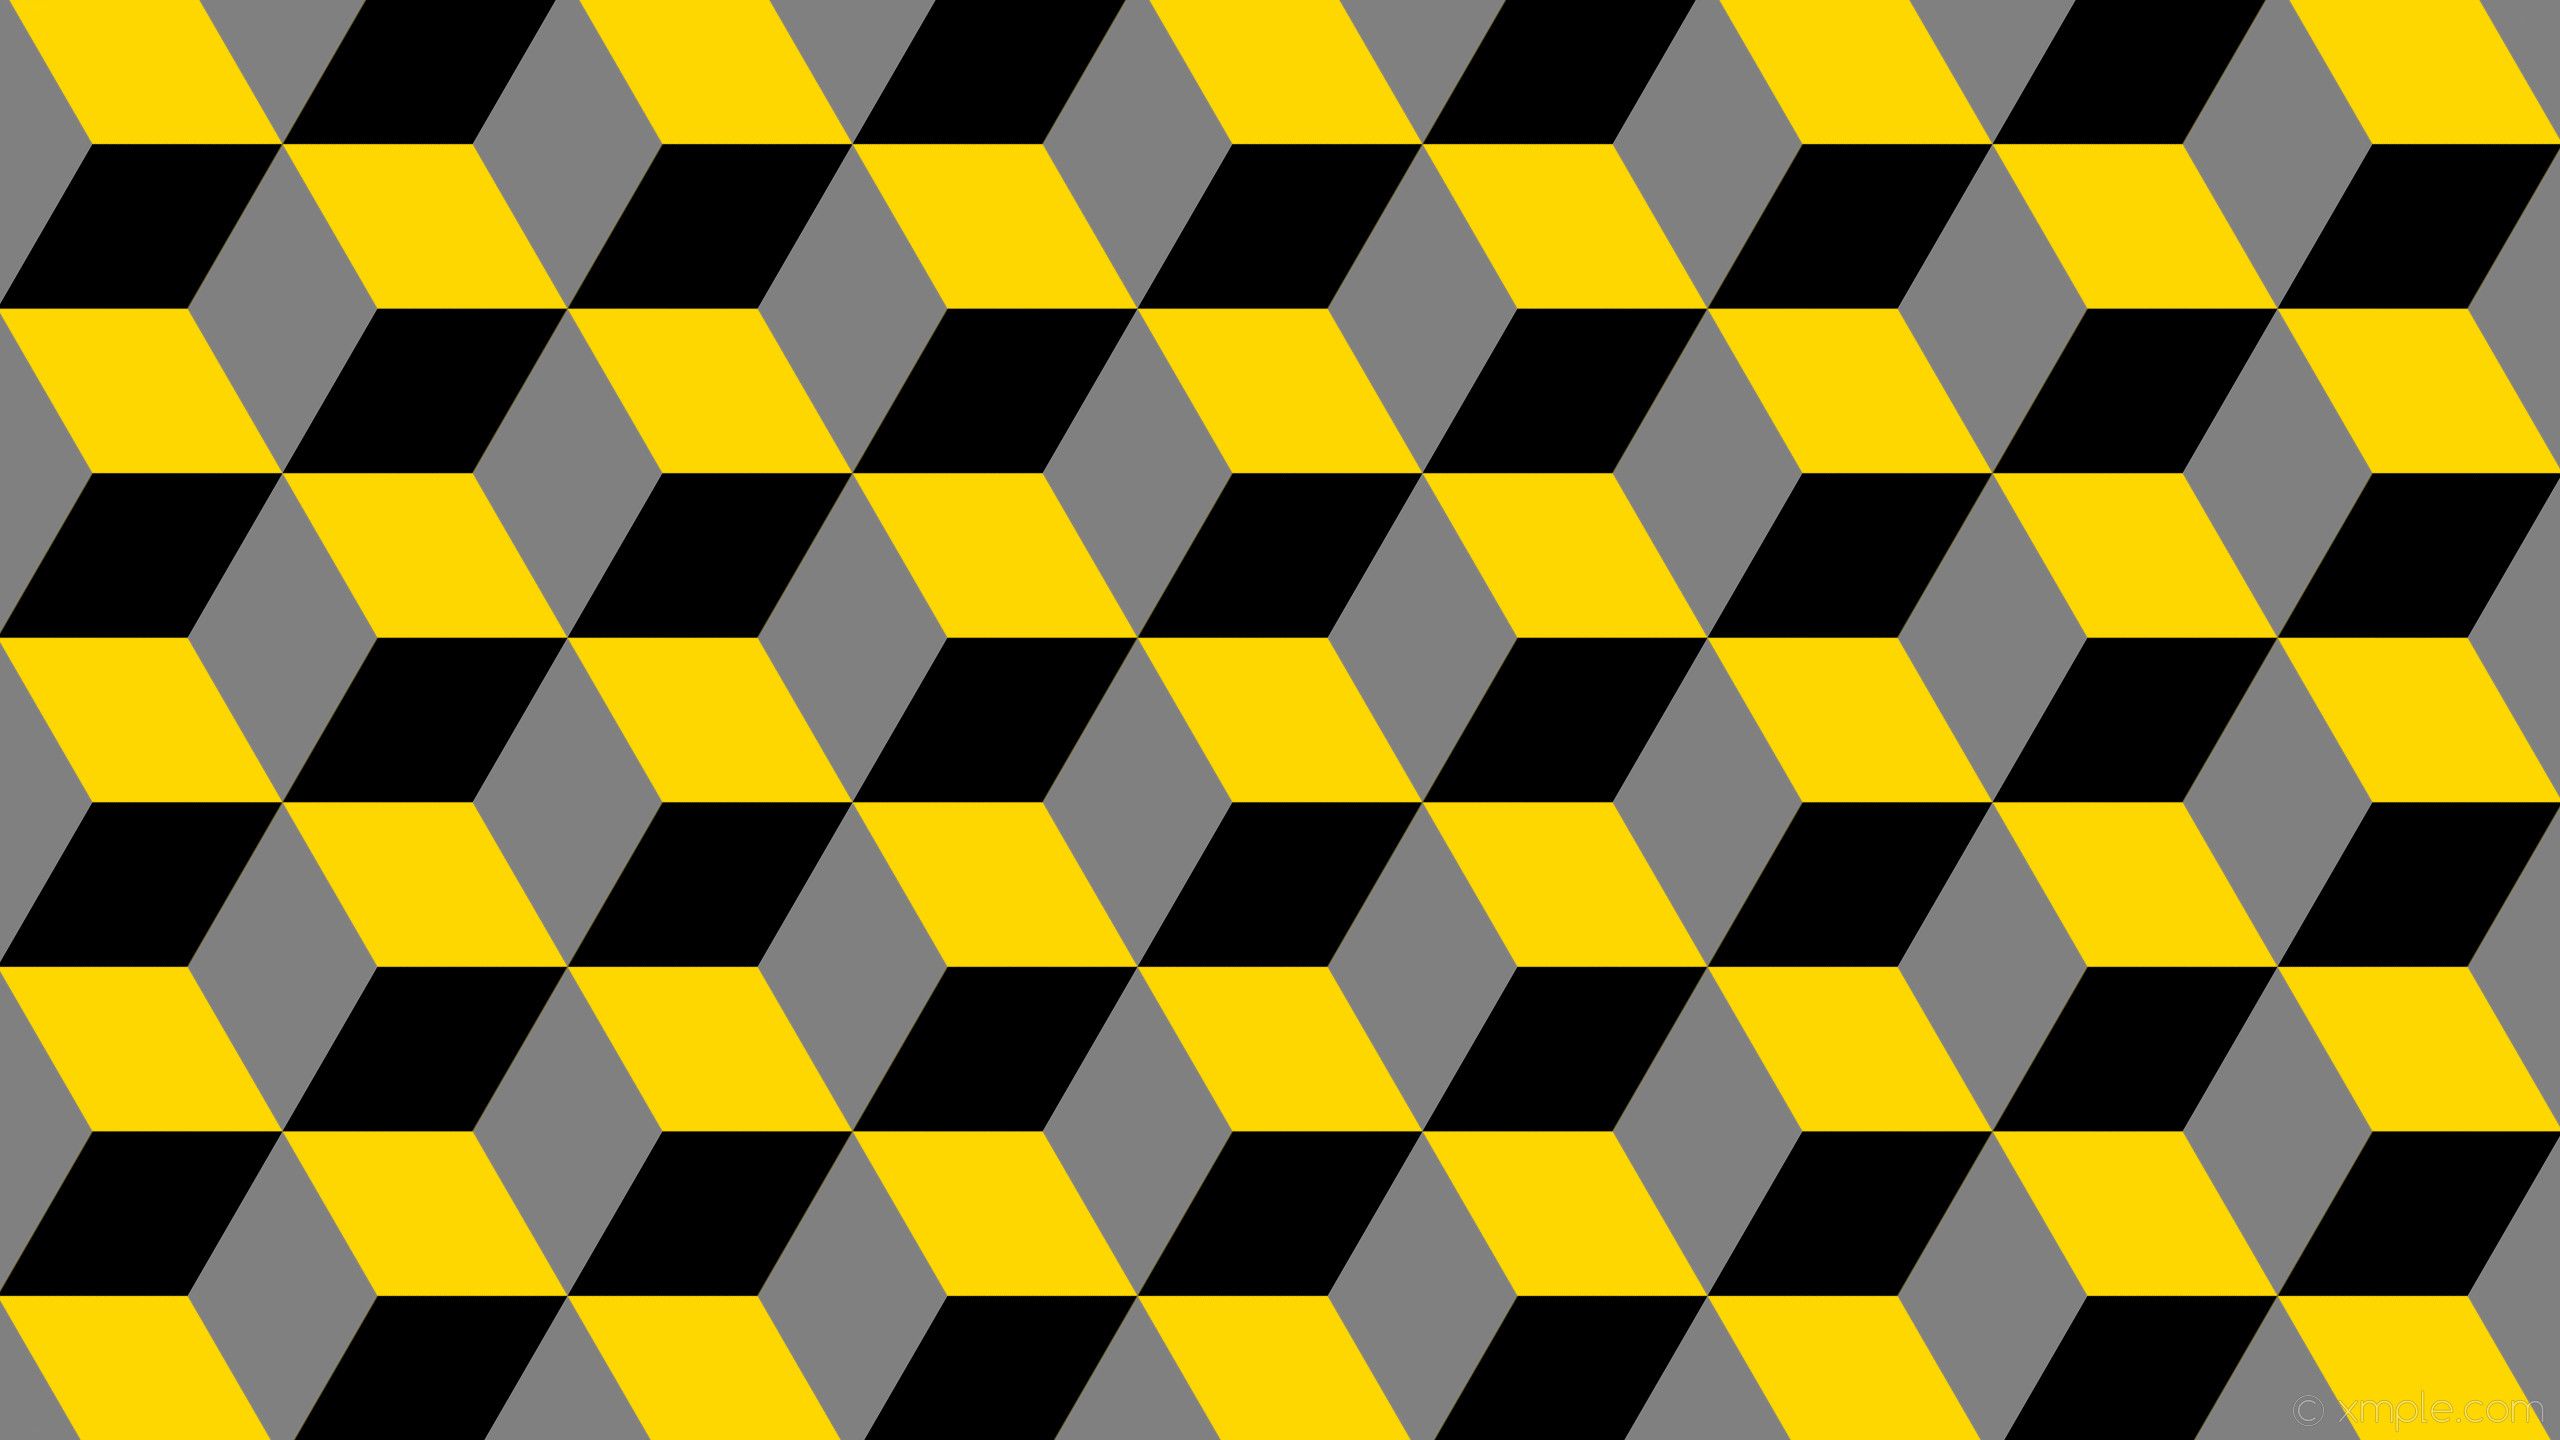 2560x1440 wallpaper grey yellow 3d cubes black gold gray #ffd700 #808080 #000000 330Â°